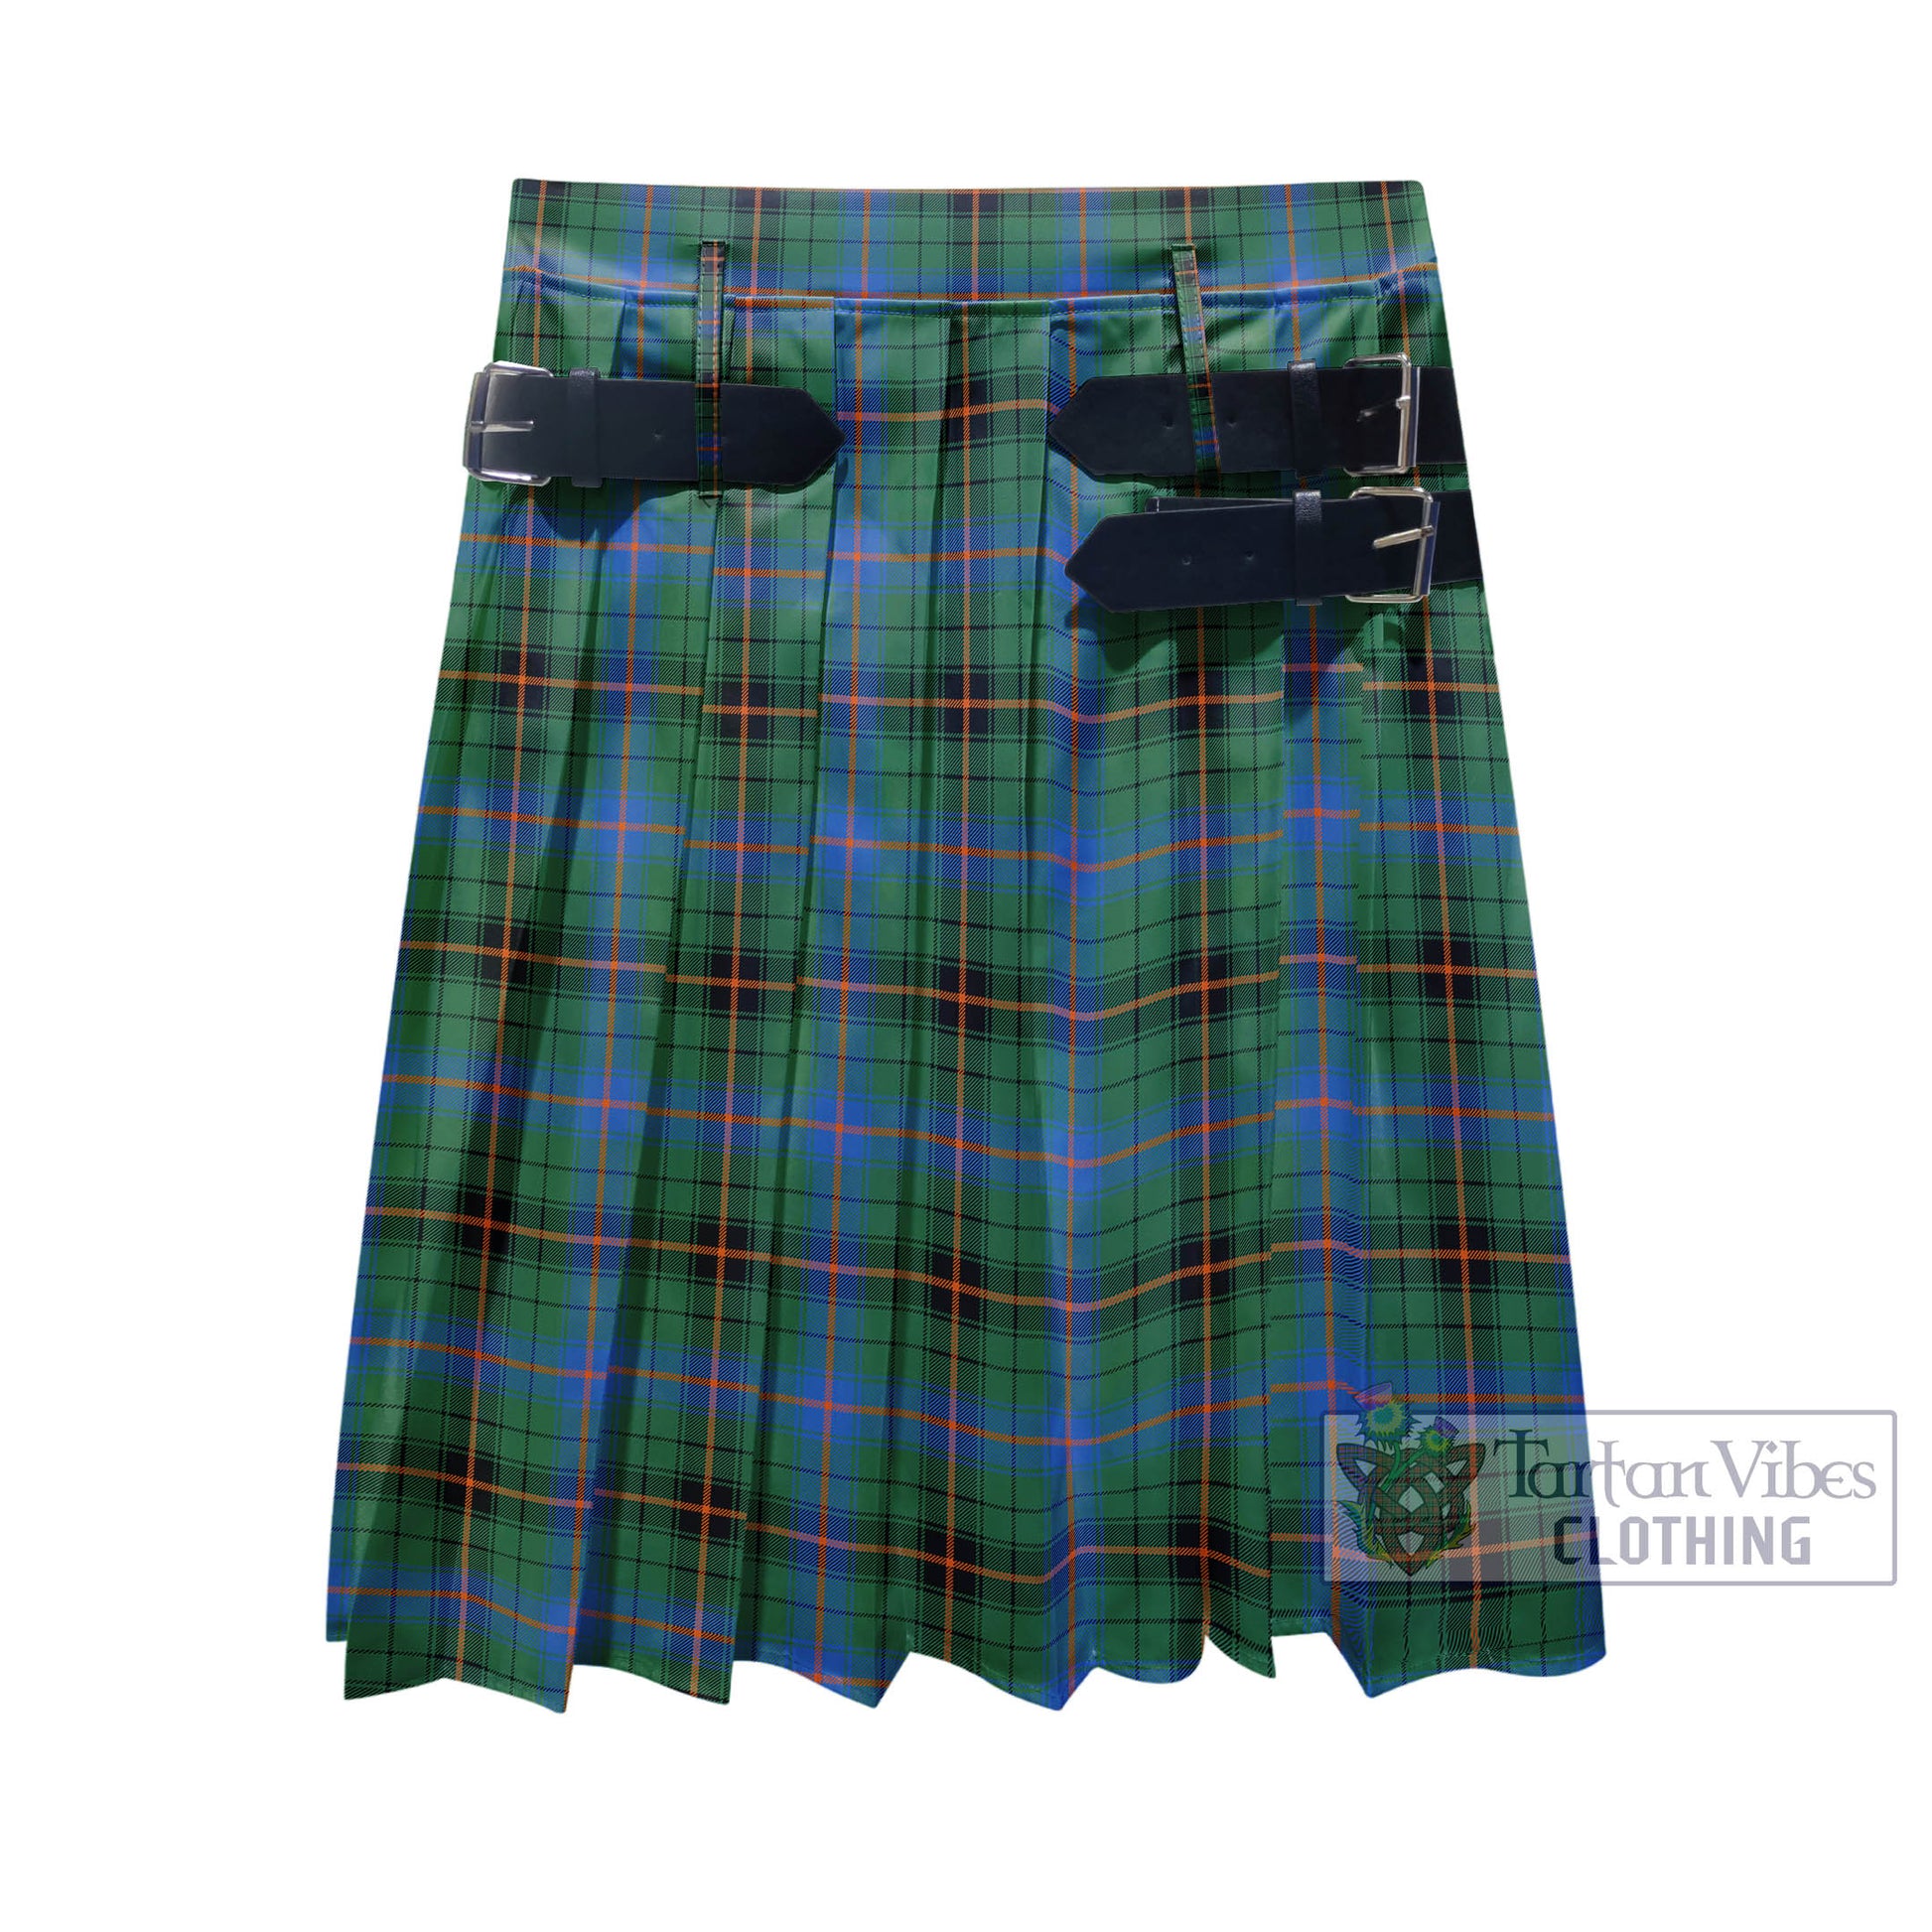 Tartan Vibes Clothing Davidson Ancient Tartan Men's Pleated Skirt - Fashion Casual Retro Scottish Style